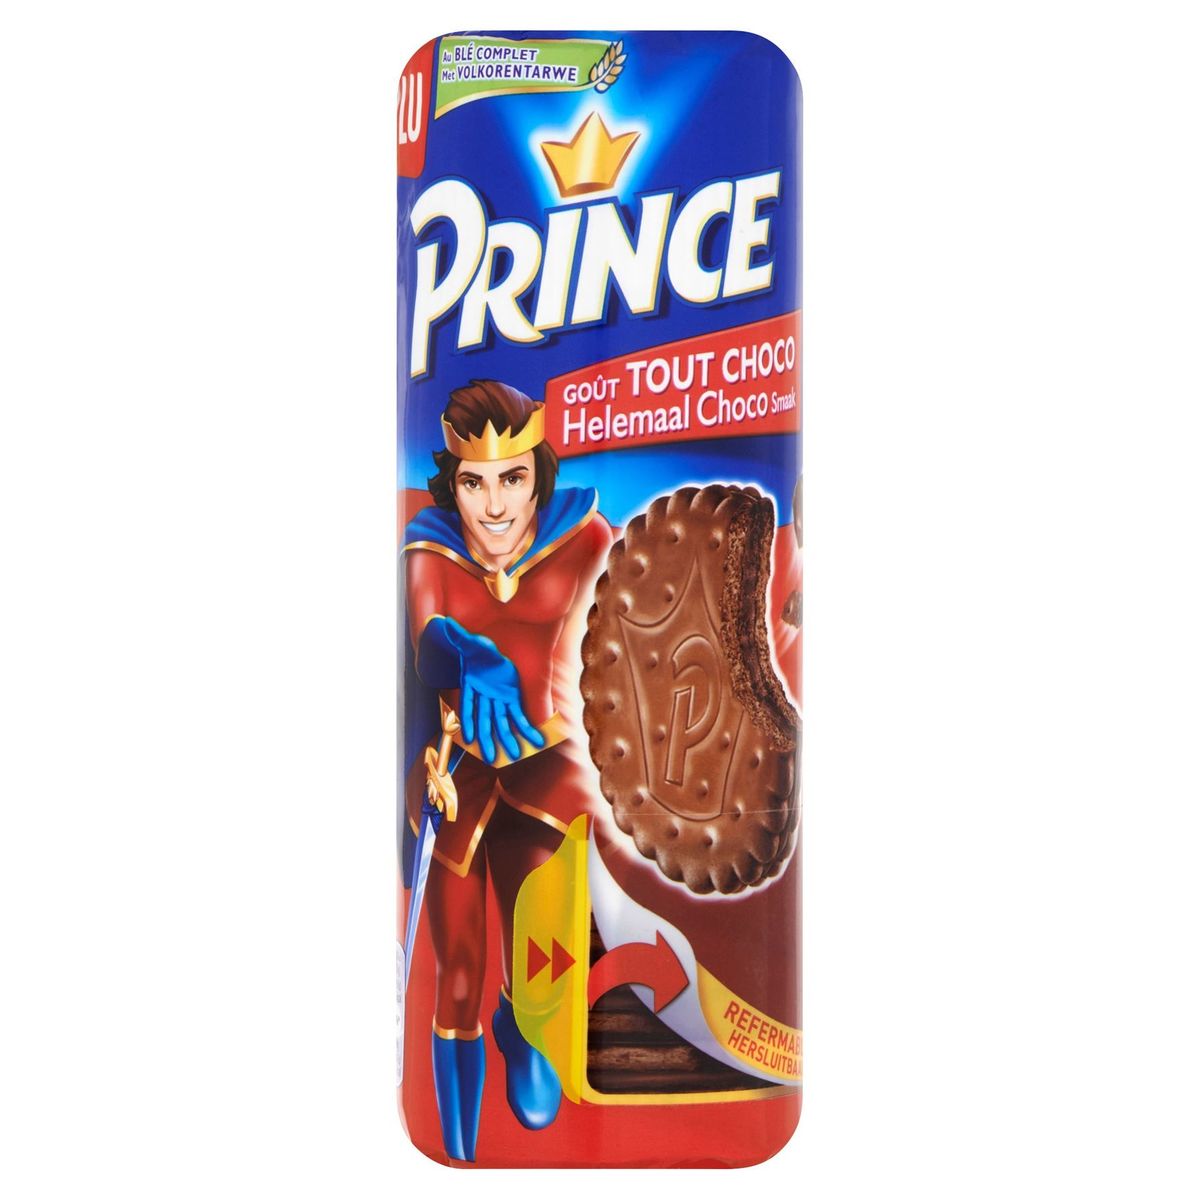 LU Prince Fourre Biscuits Tout Choco 300 g